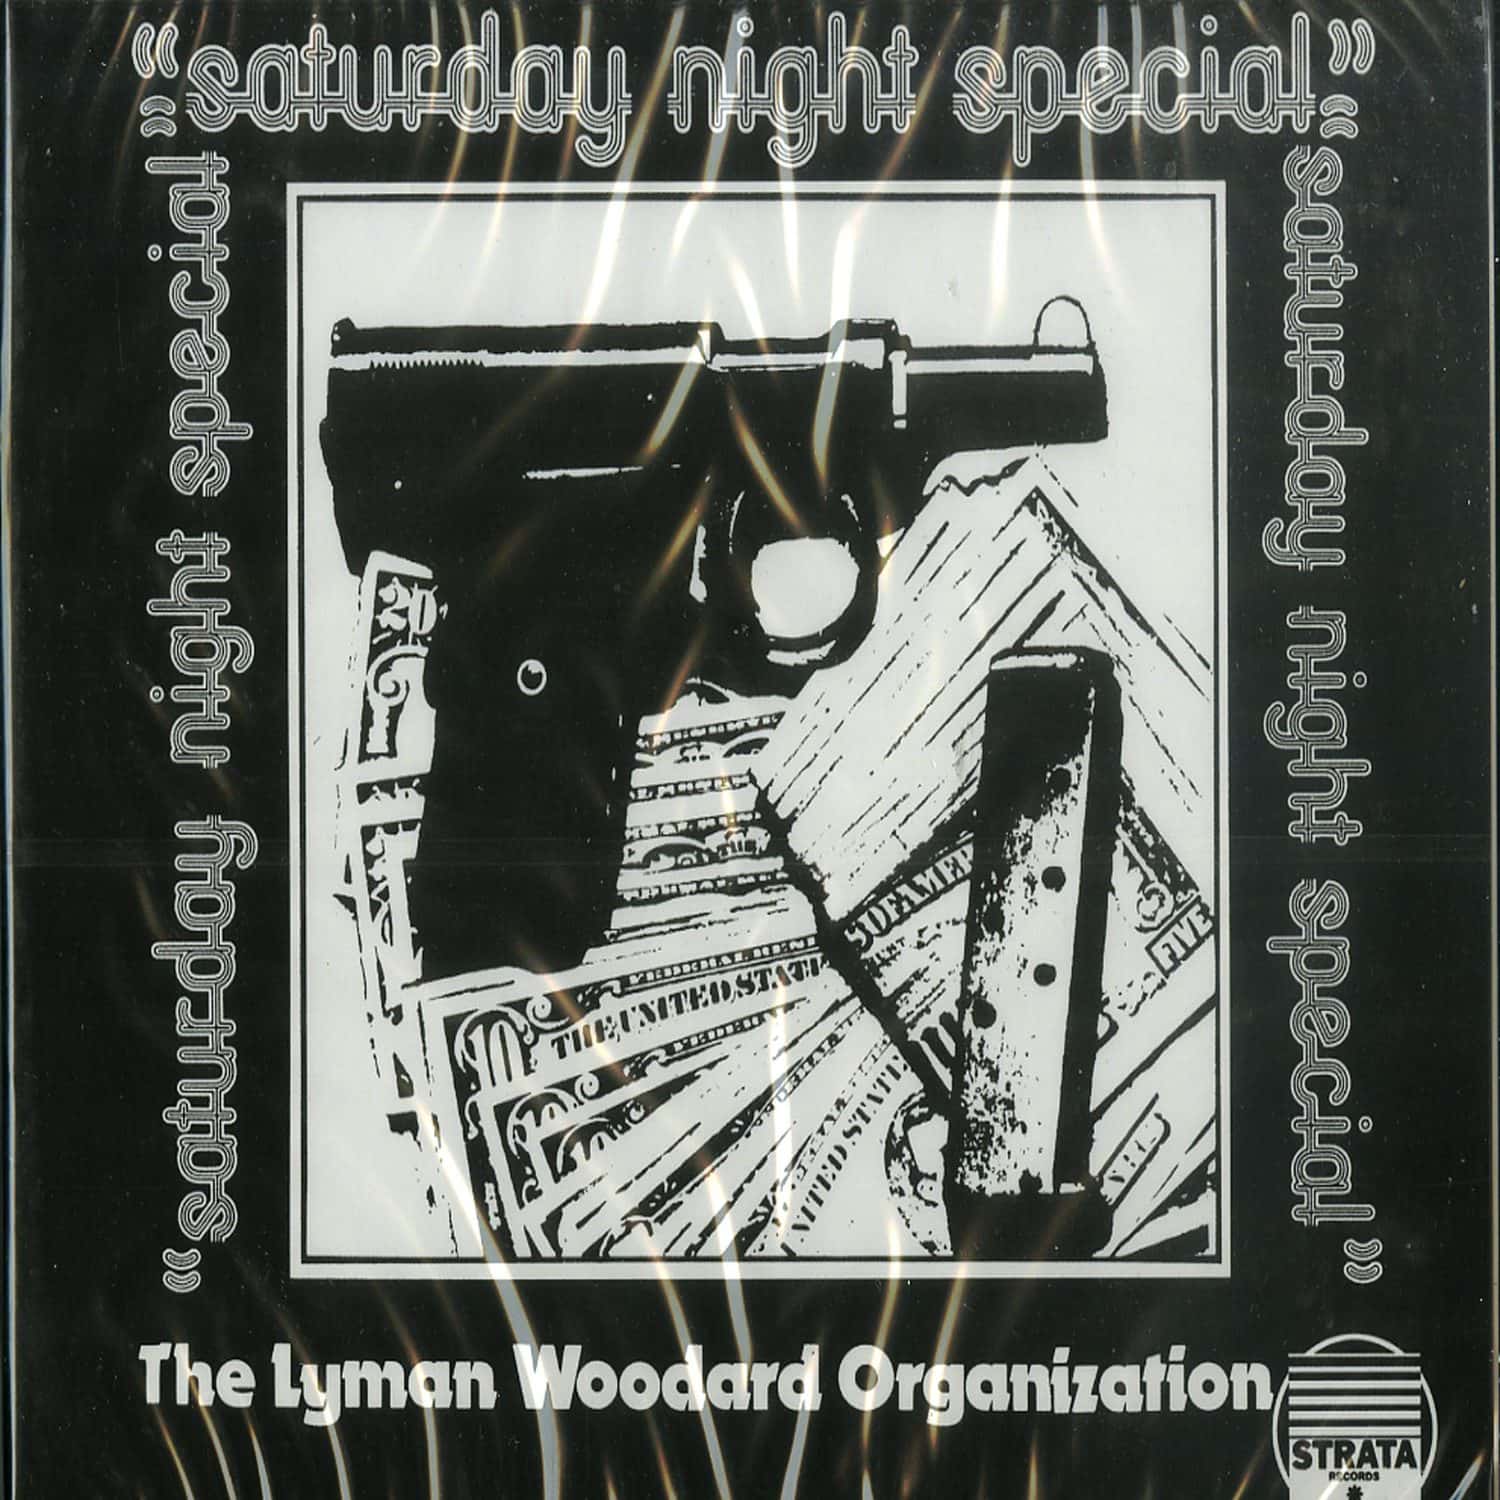 Lyman Woodard Organization - SATURDAY NIGHT SPECIAL 